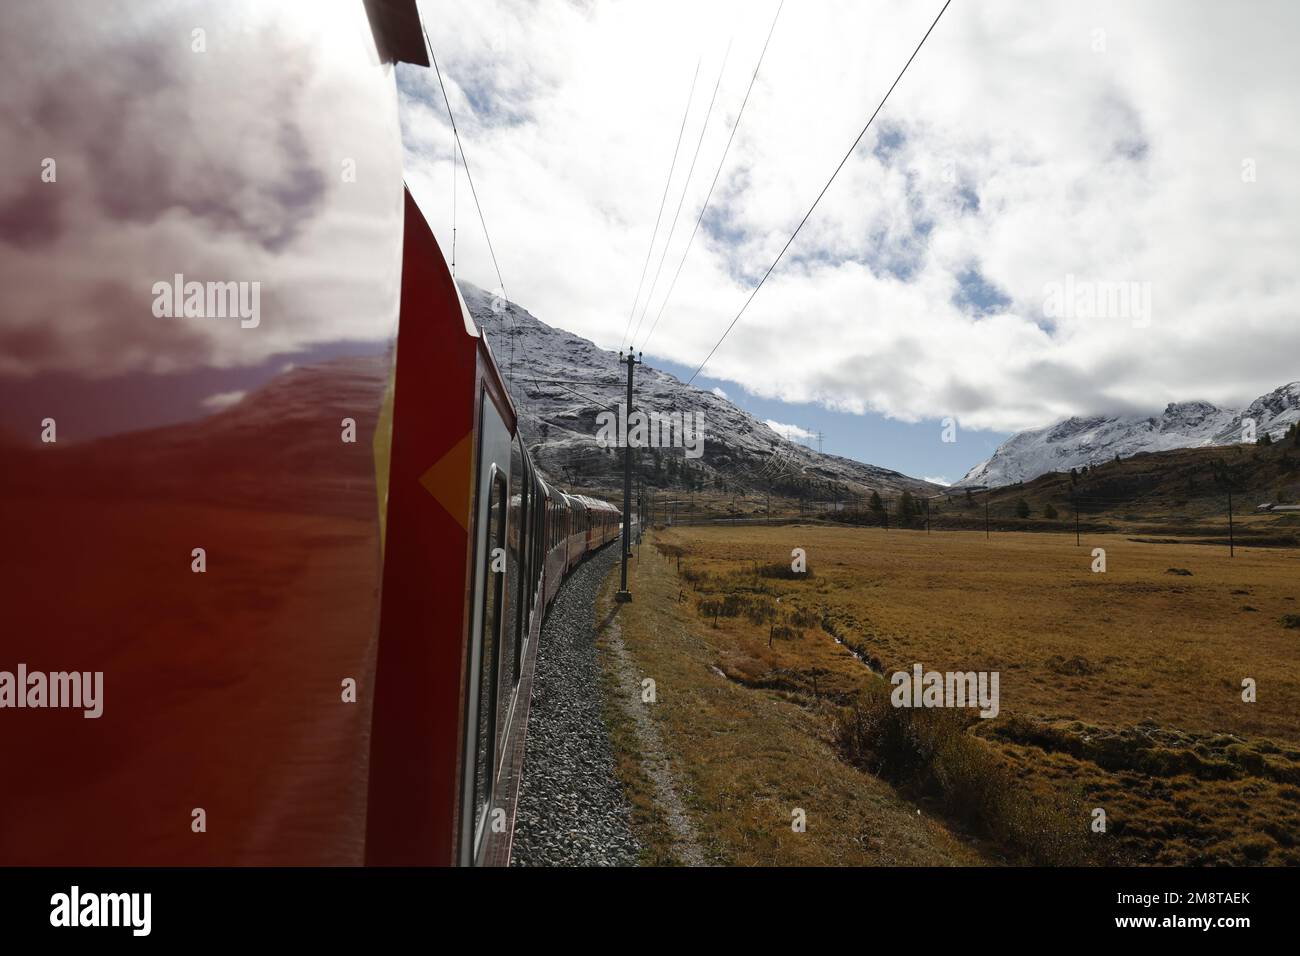 BERNINA Expresszug durch die Alpen, Schweiz Stockfoto